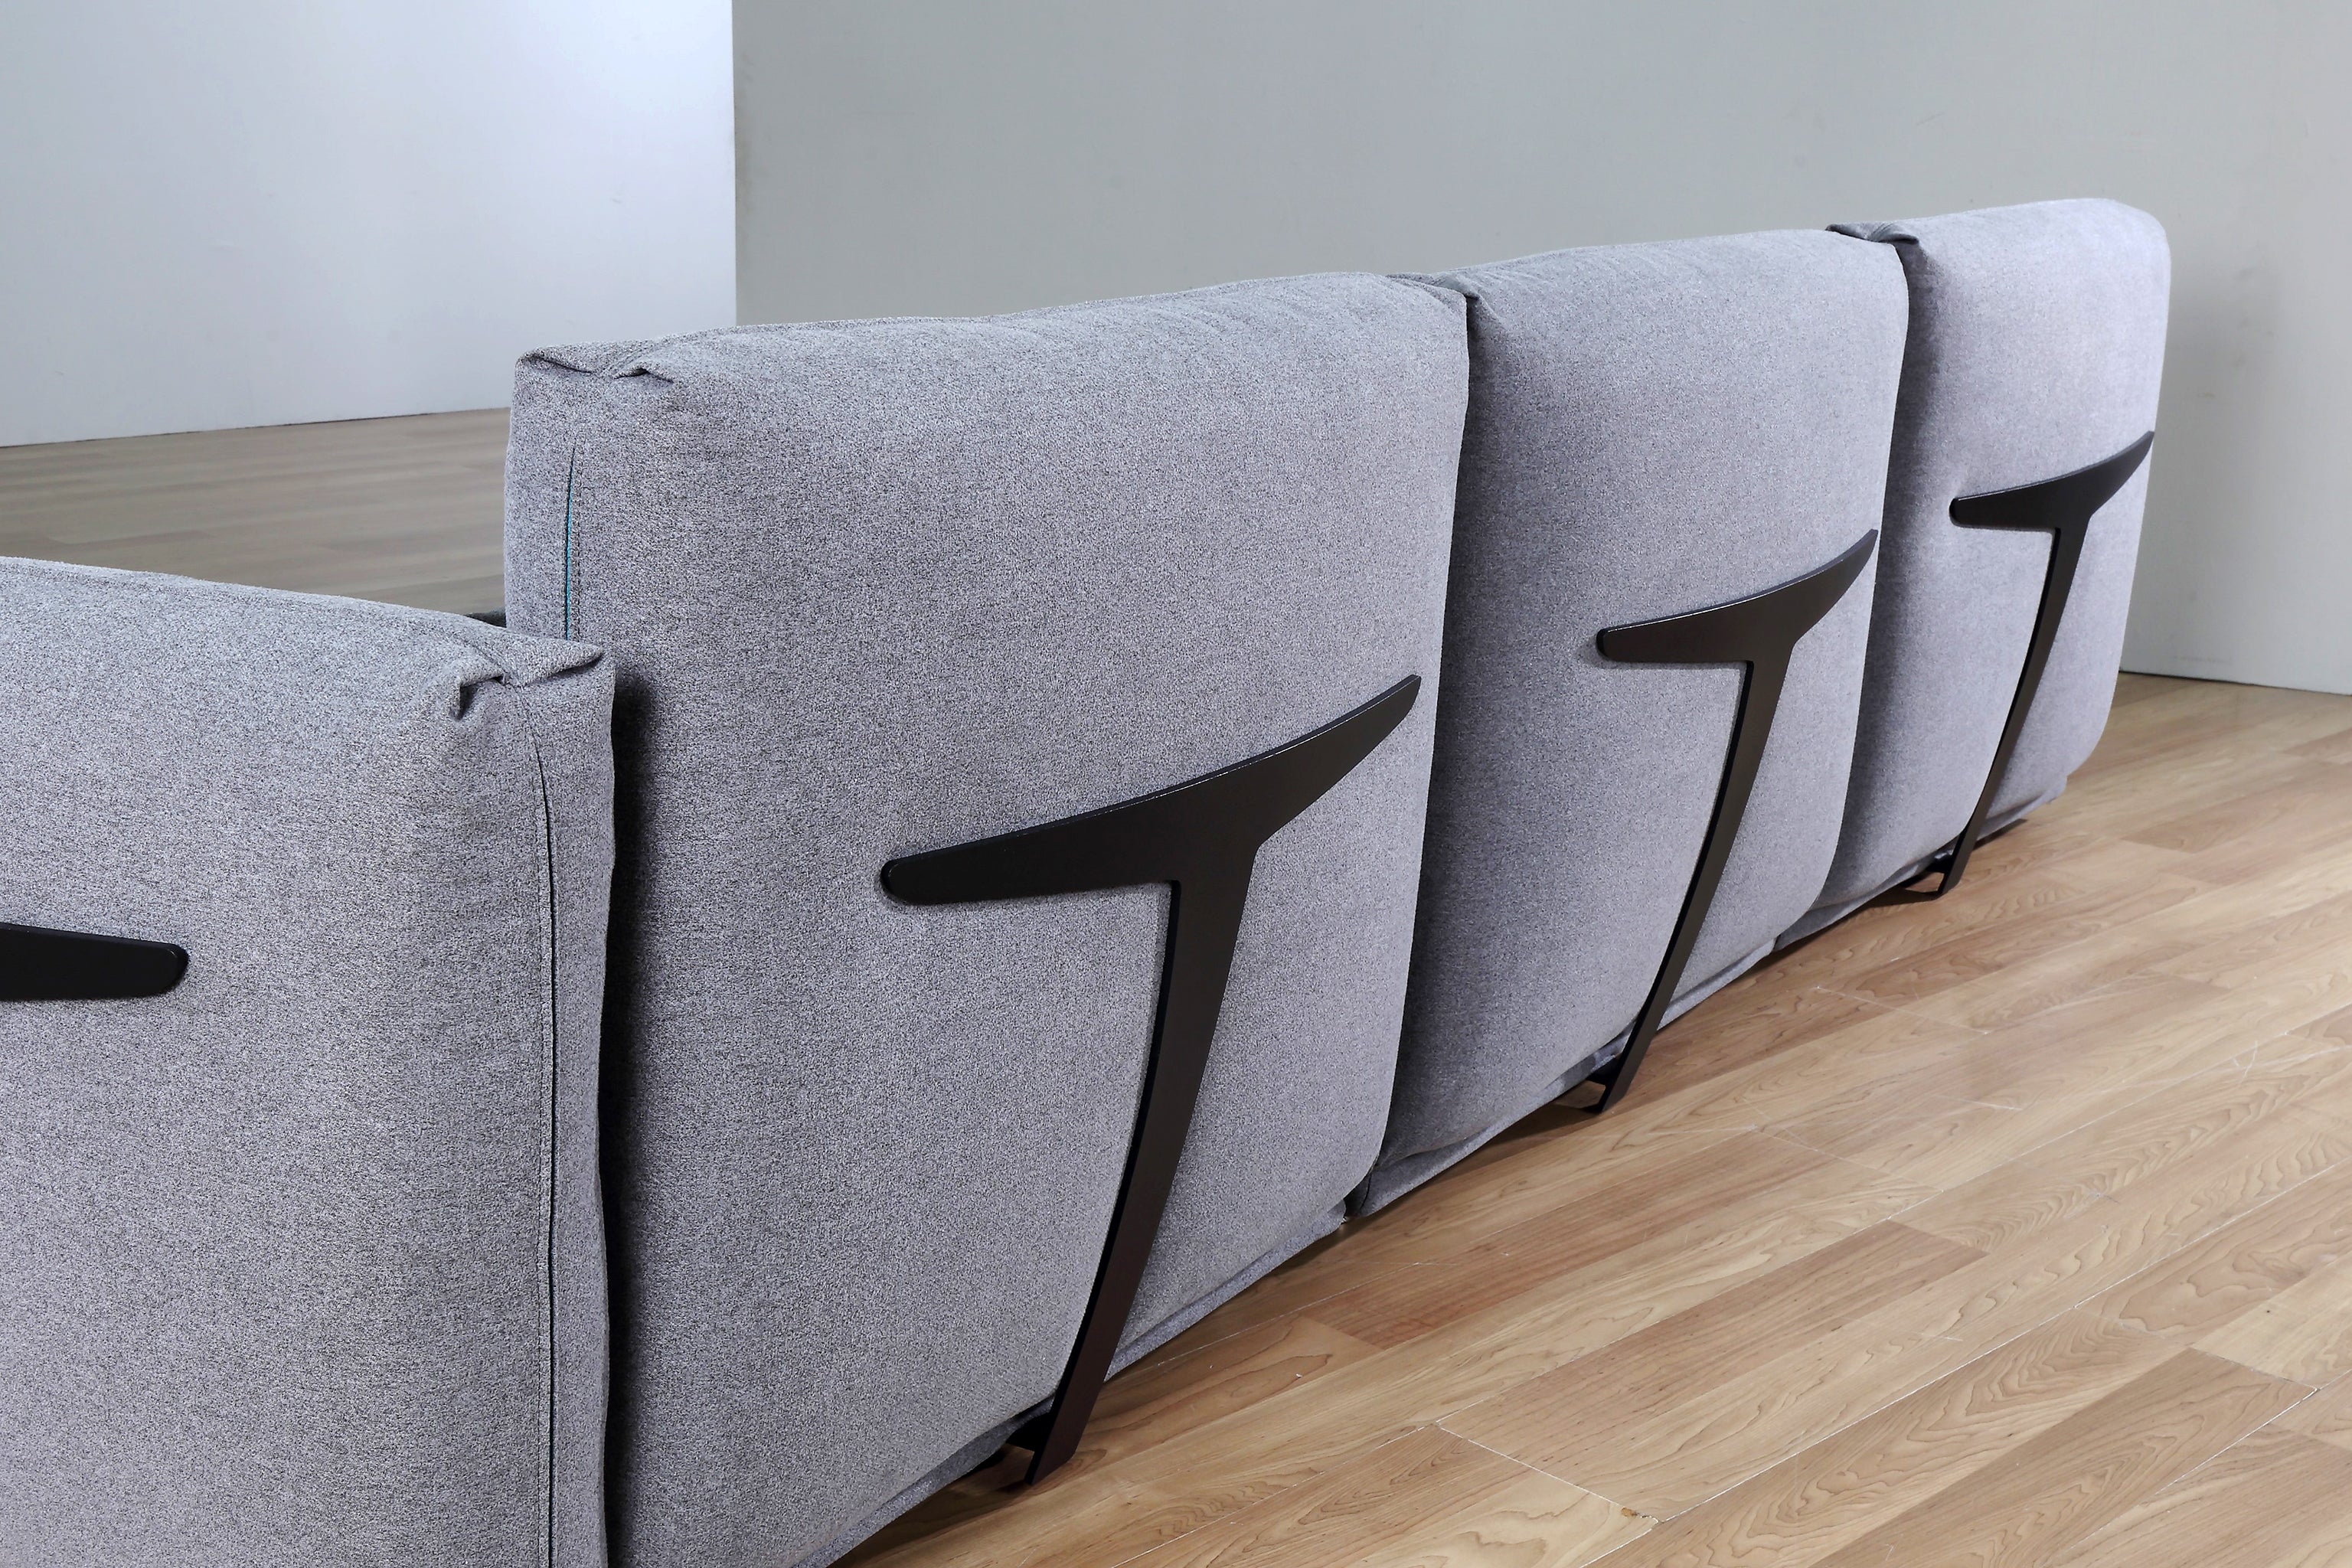 FELIS Sectional Sofa in Fabric by Castilla